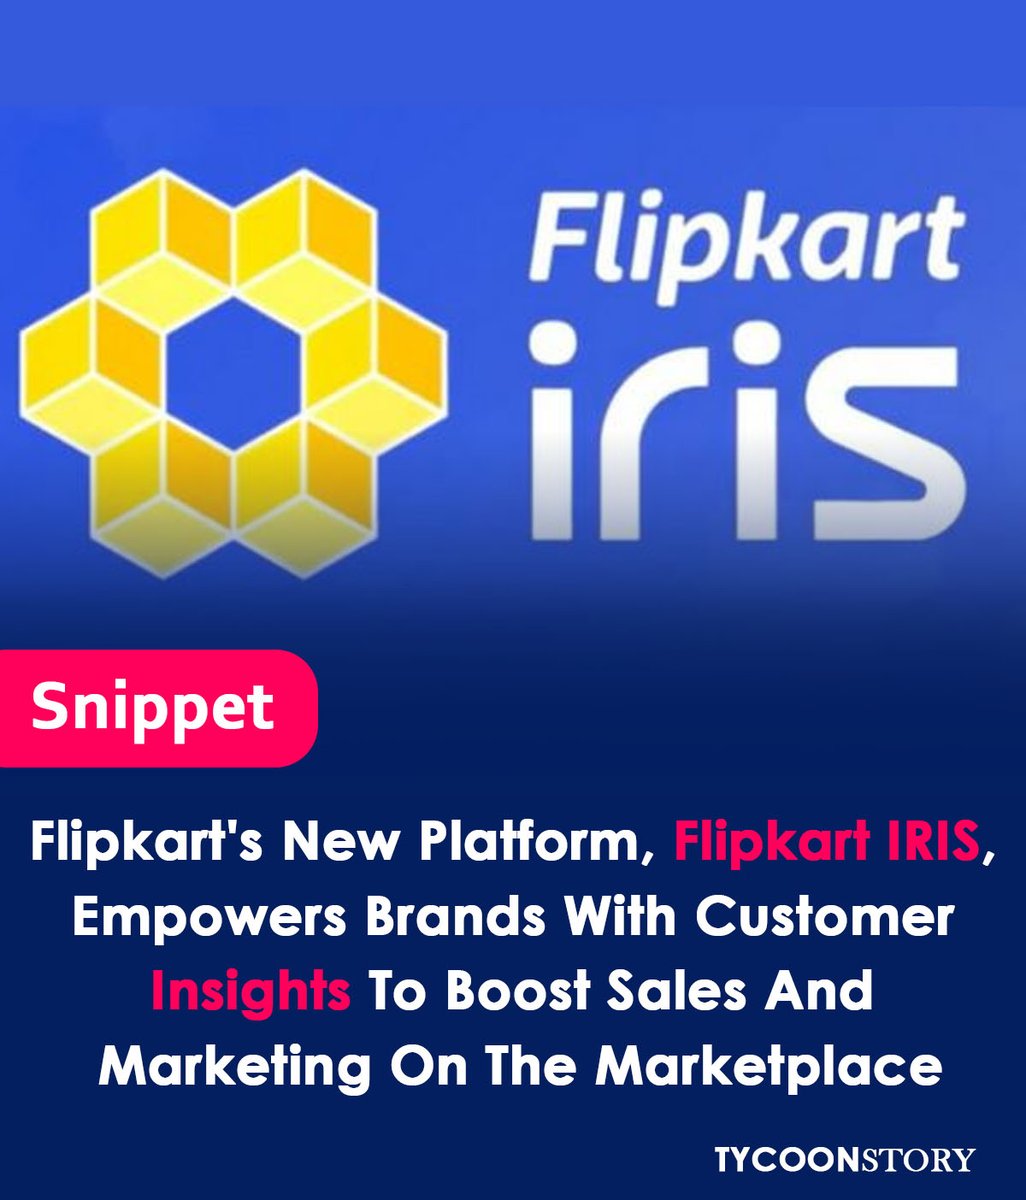 Flipkart Launches IRIS: Empowering Brands with Consumer Insights
#FlipkartIRIS #ecommerce #businessintelligence #consumerinsights #datadrivenmarketing  #marketingstrategy #growthhacking #rateoptimization #ecommerceanalytics #customerengagement @Flipkart 
tycoonstory.com